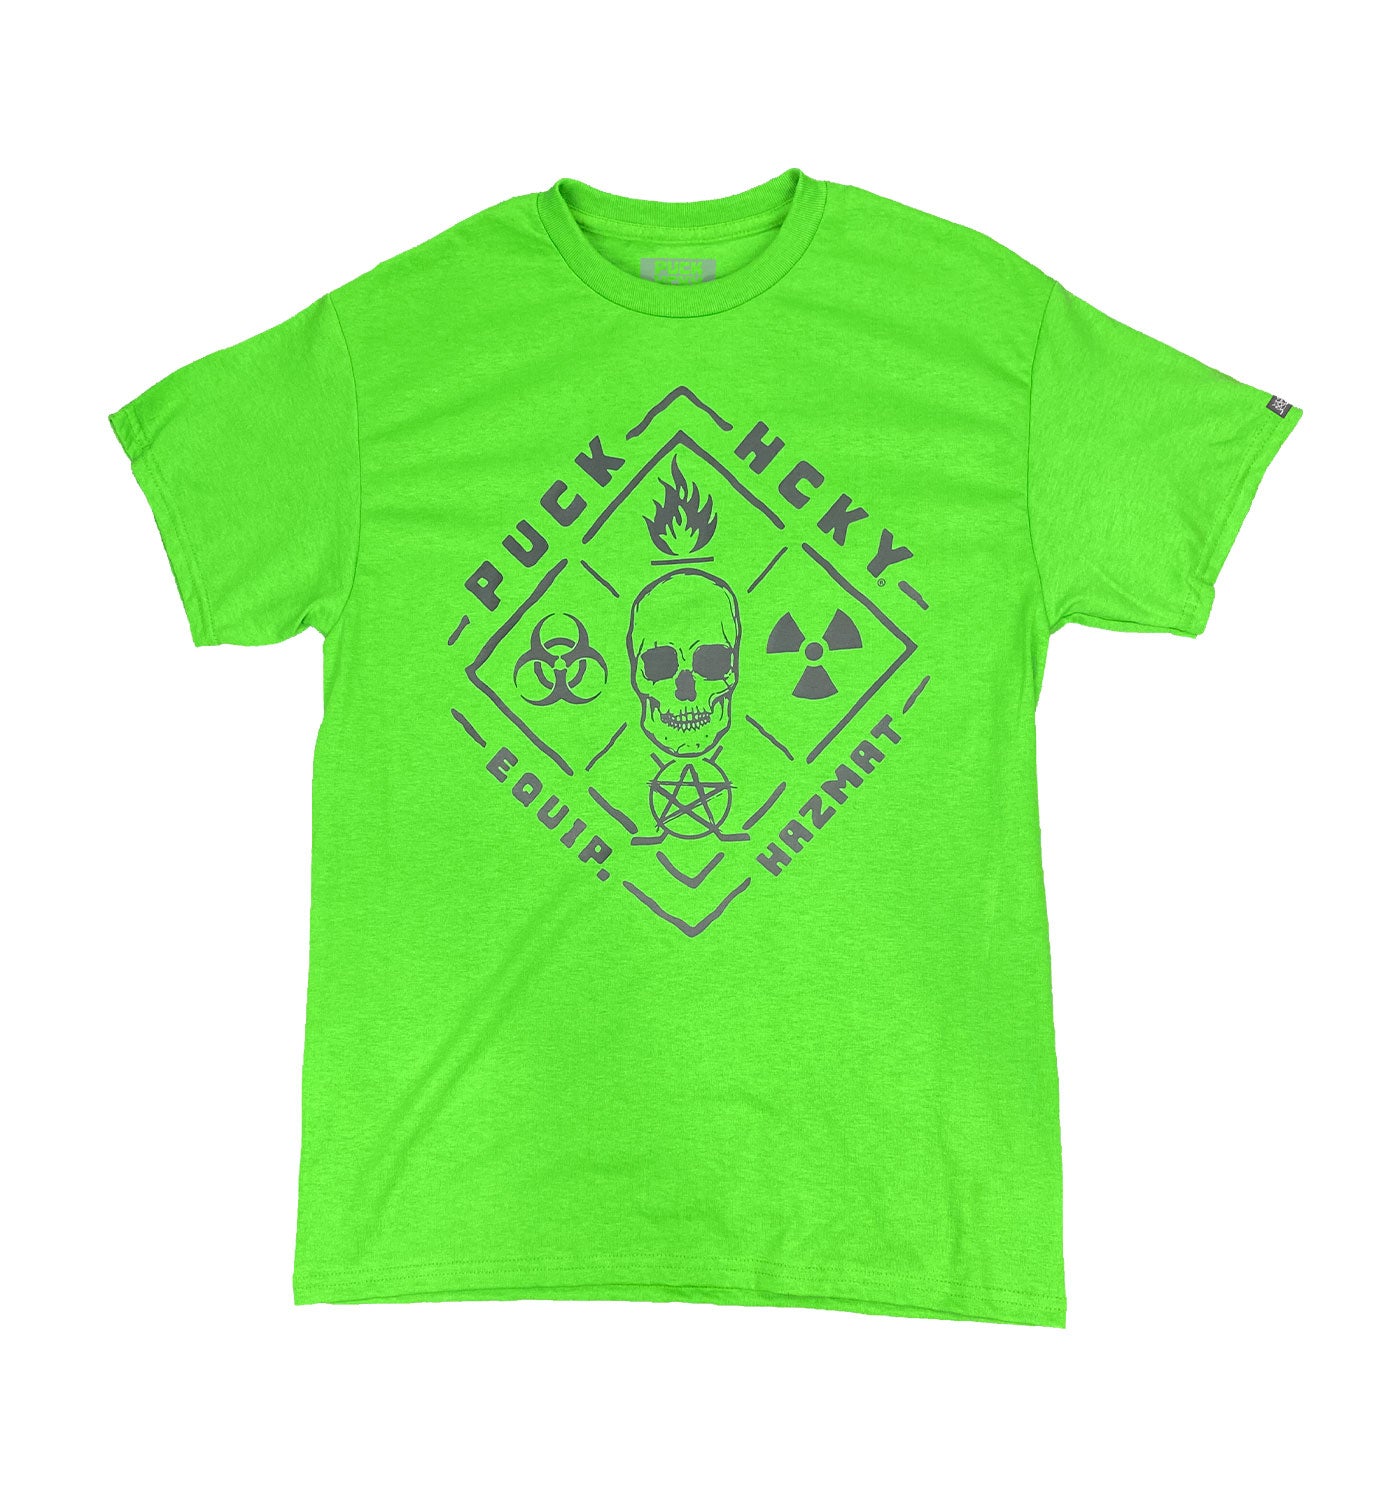 PUCK HCKY 'EQUIPMENT HAZMAT' short sleeve hockey t-shirt in electric green front view